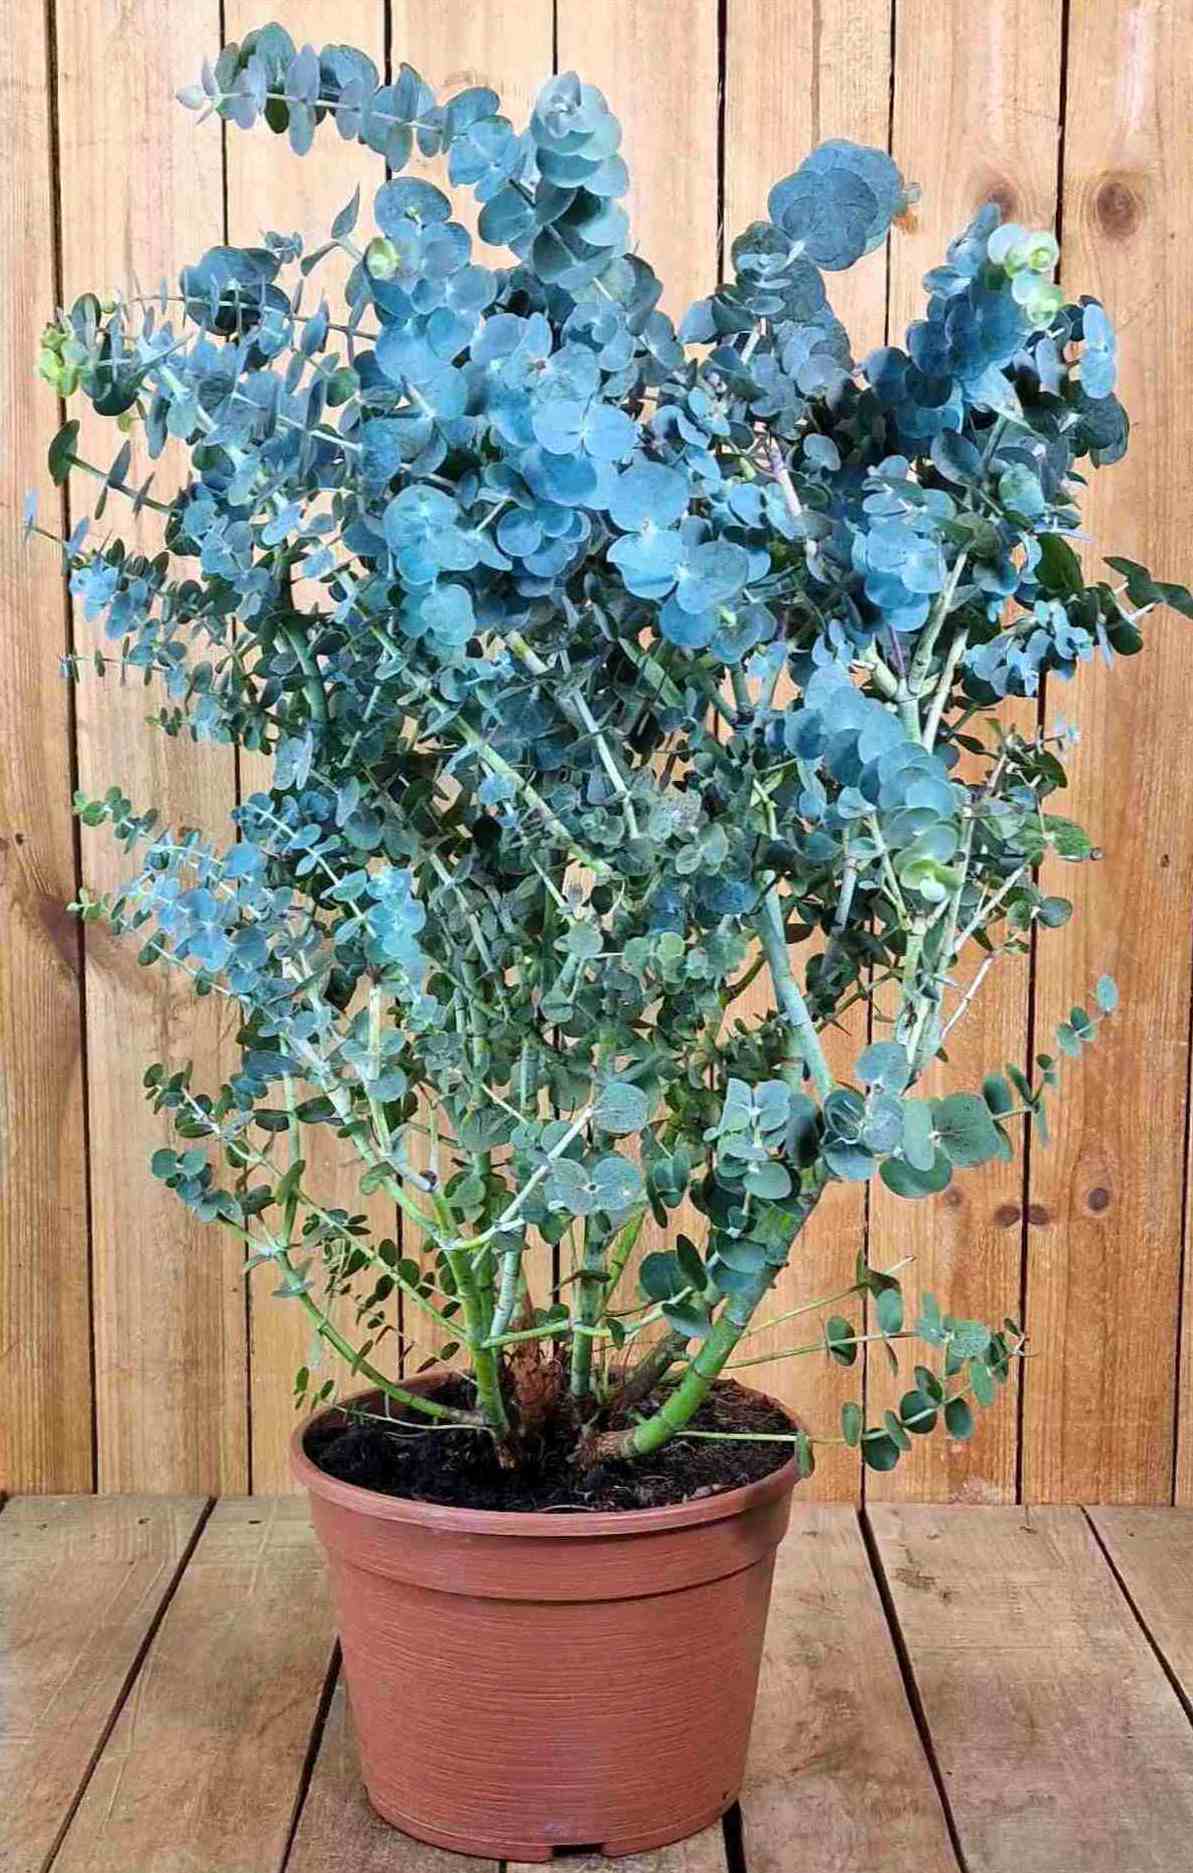 Eukalyptus "Mezzo" Busch 'Baby Blue' - Eucalyptus gunnii